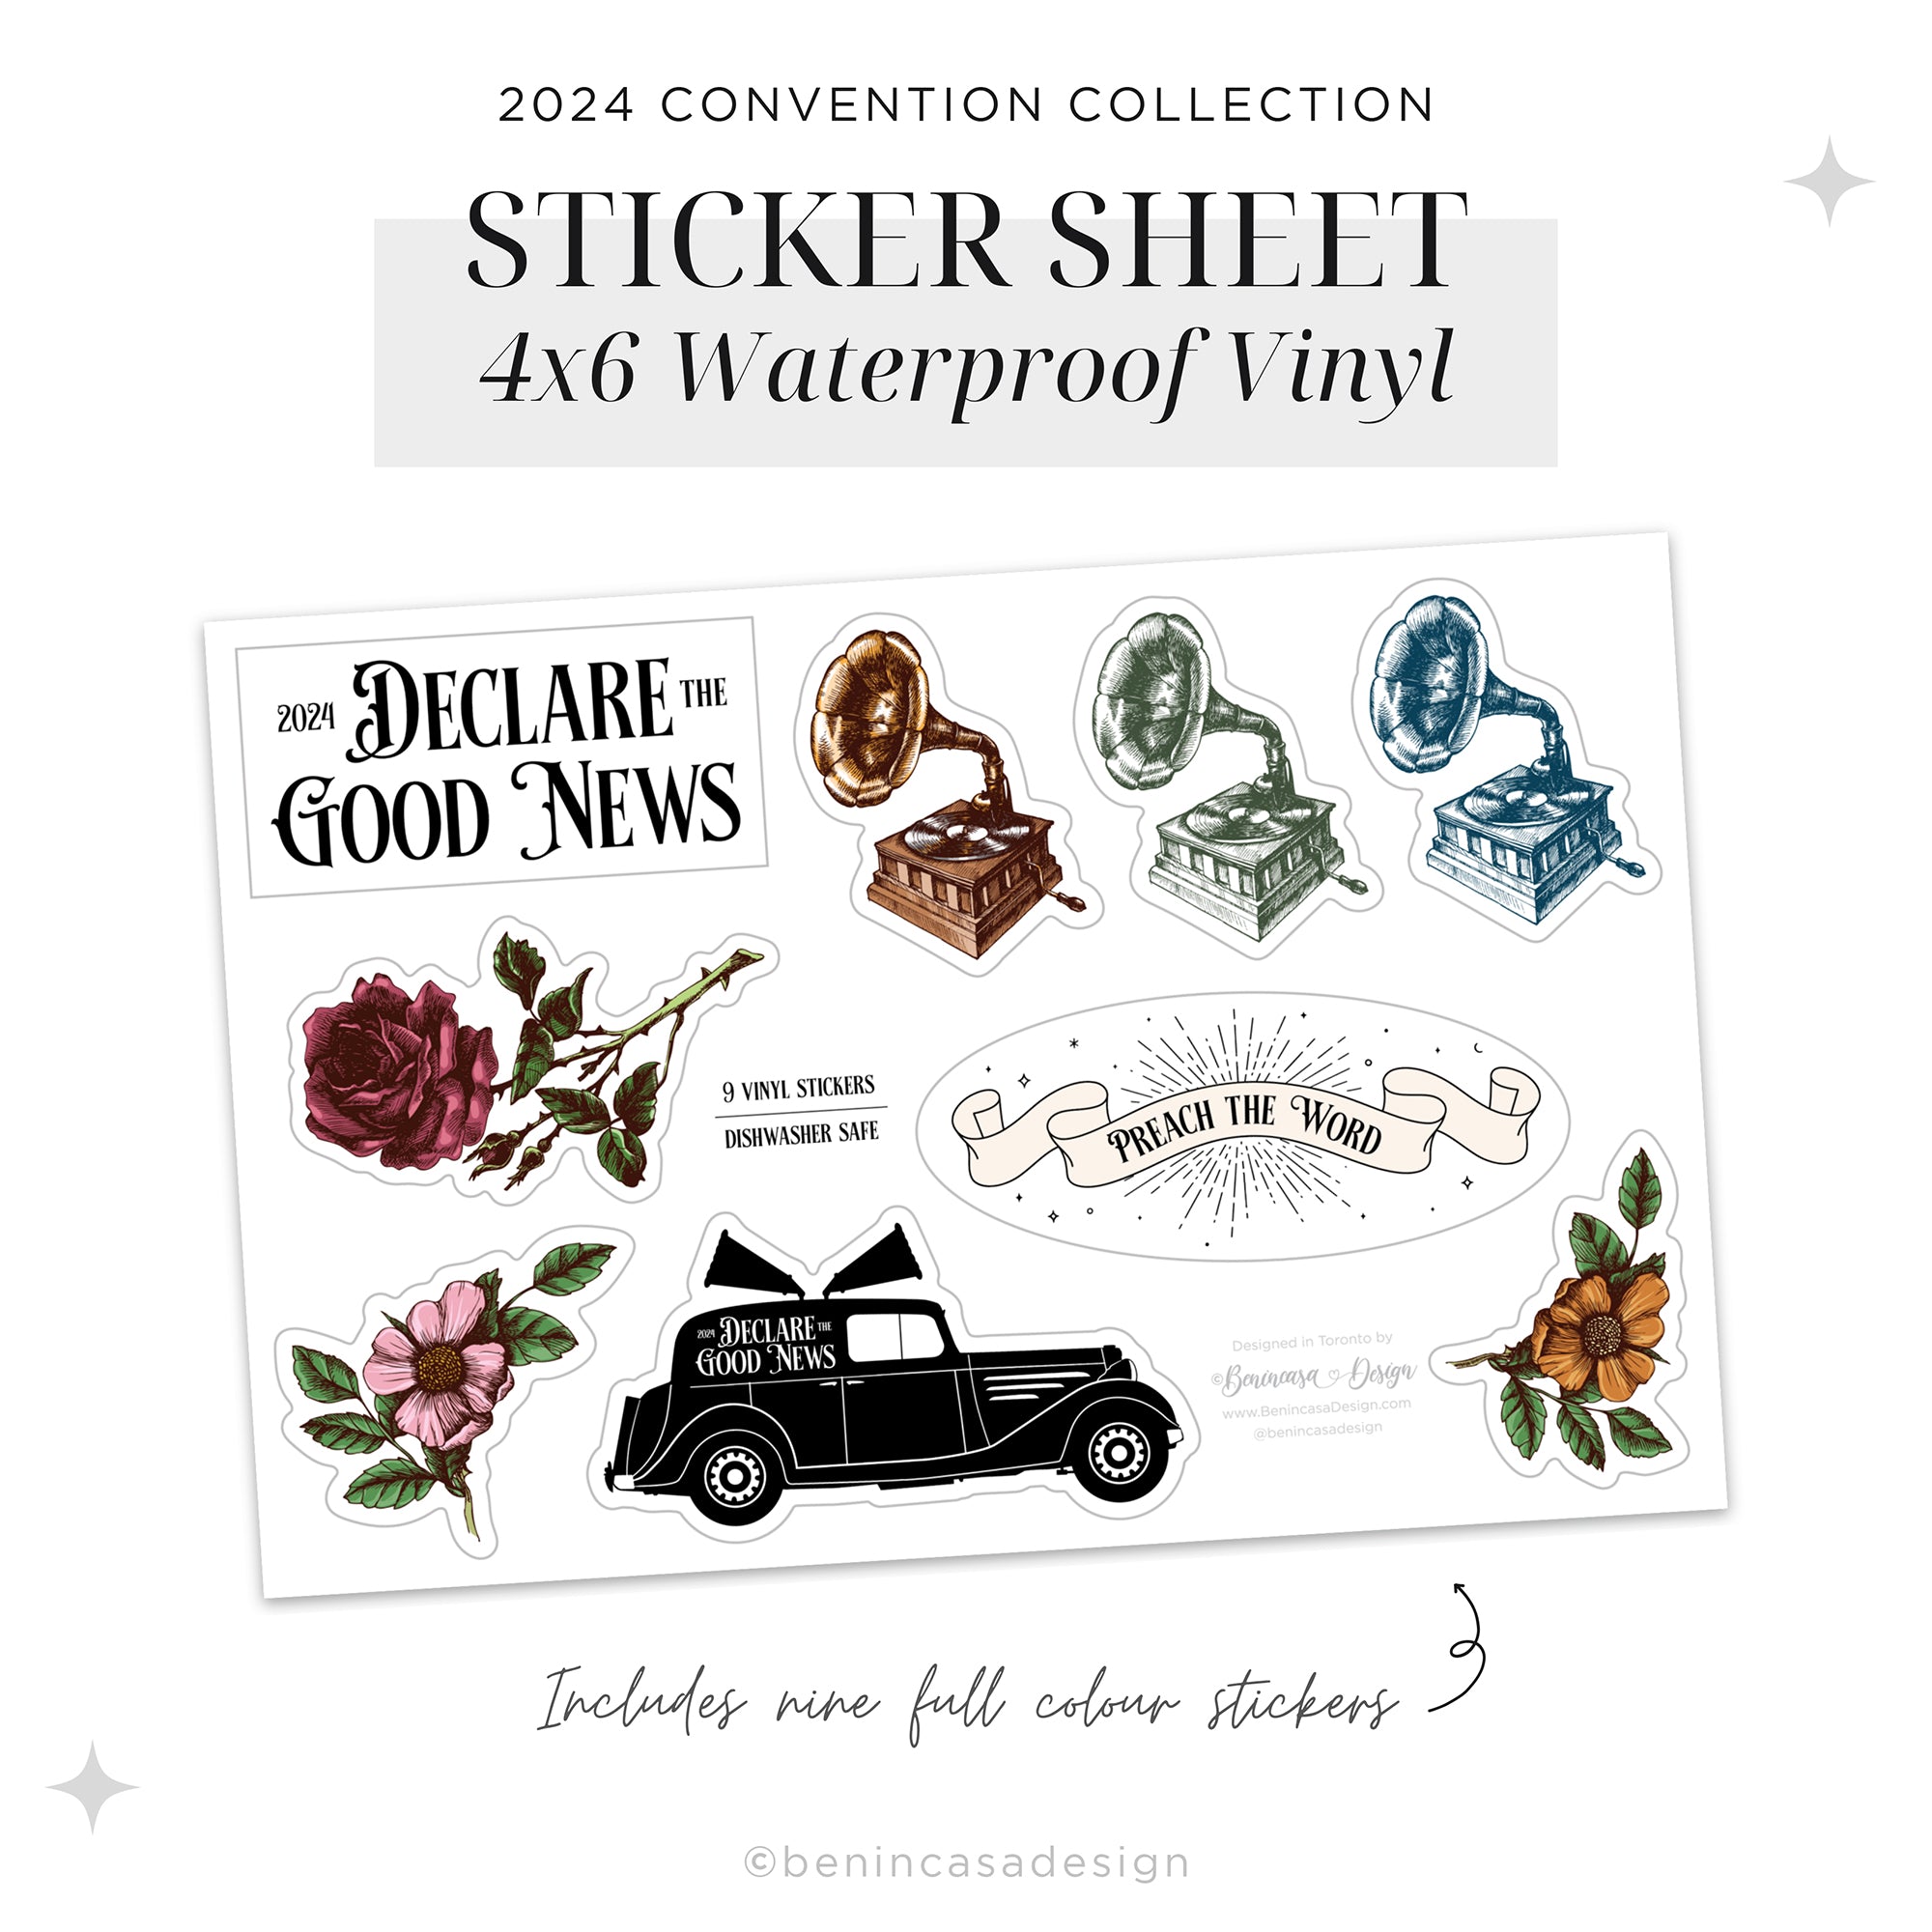 Waterproof Vinyl Sticker Sheet: 2024 “Declare the Good News”!